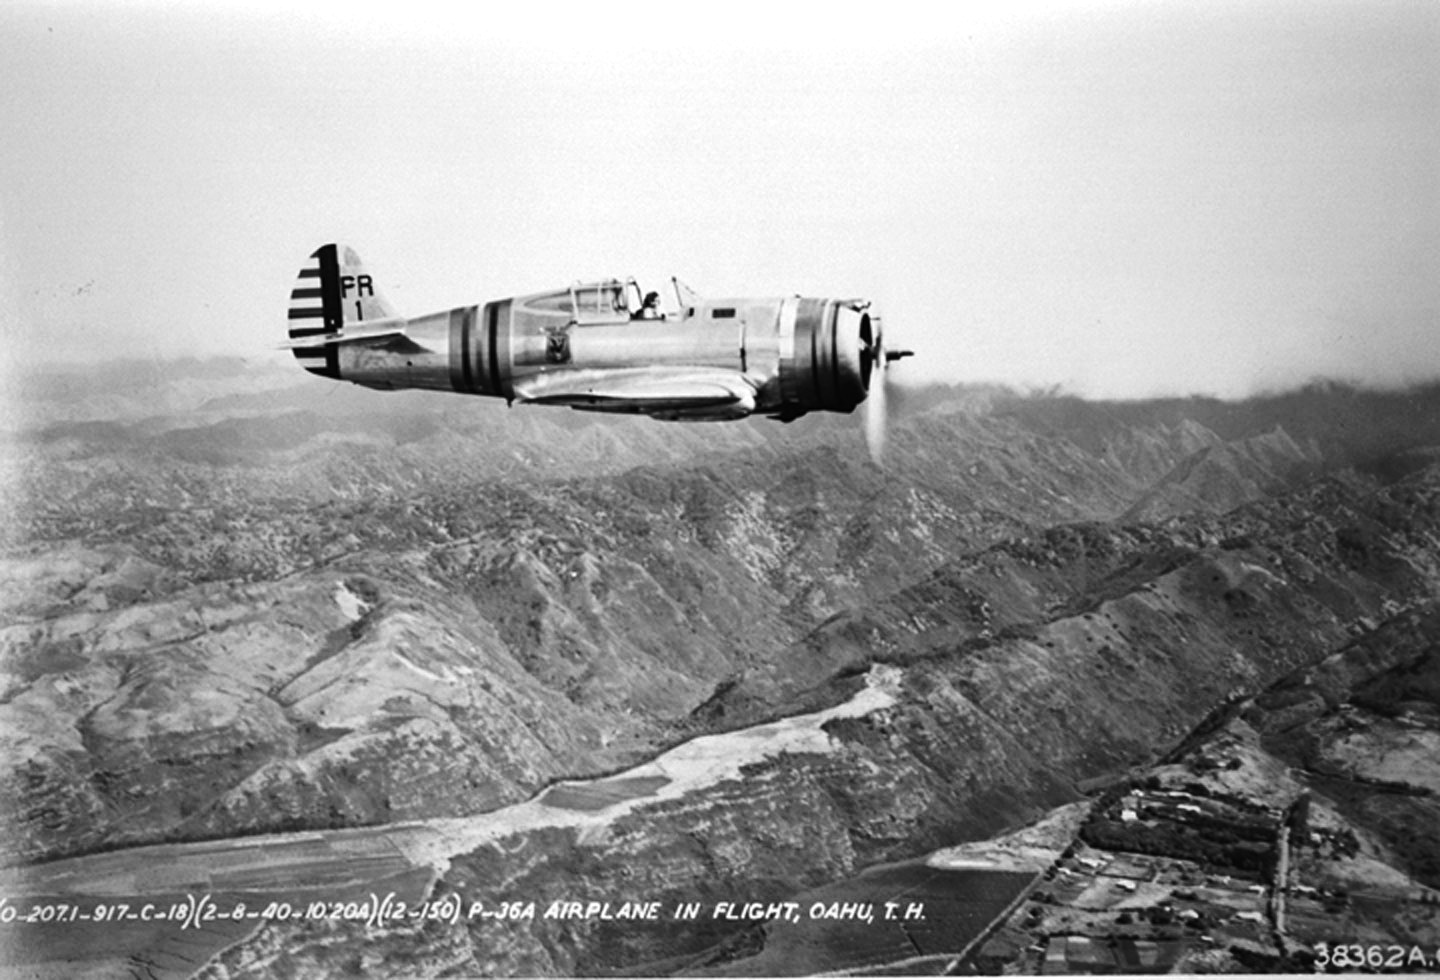 P-36 Hawk fighter based at Hickam Field in flight over Oahu, US Territory of Hawaii, 8 Feb 1940